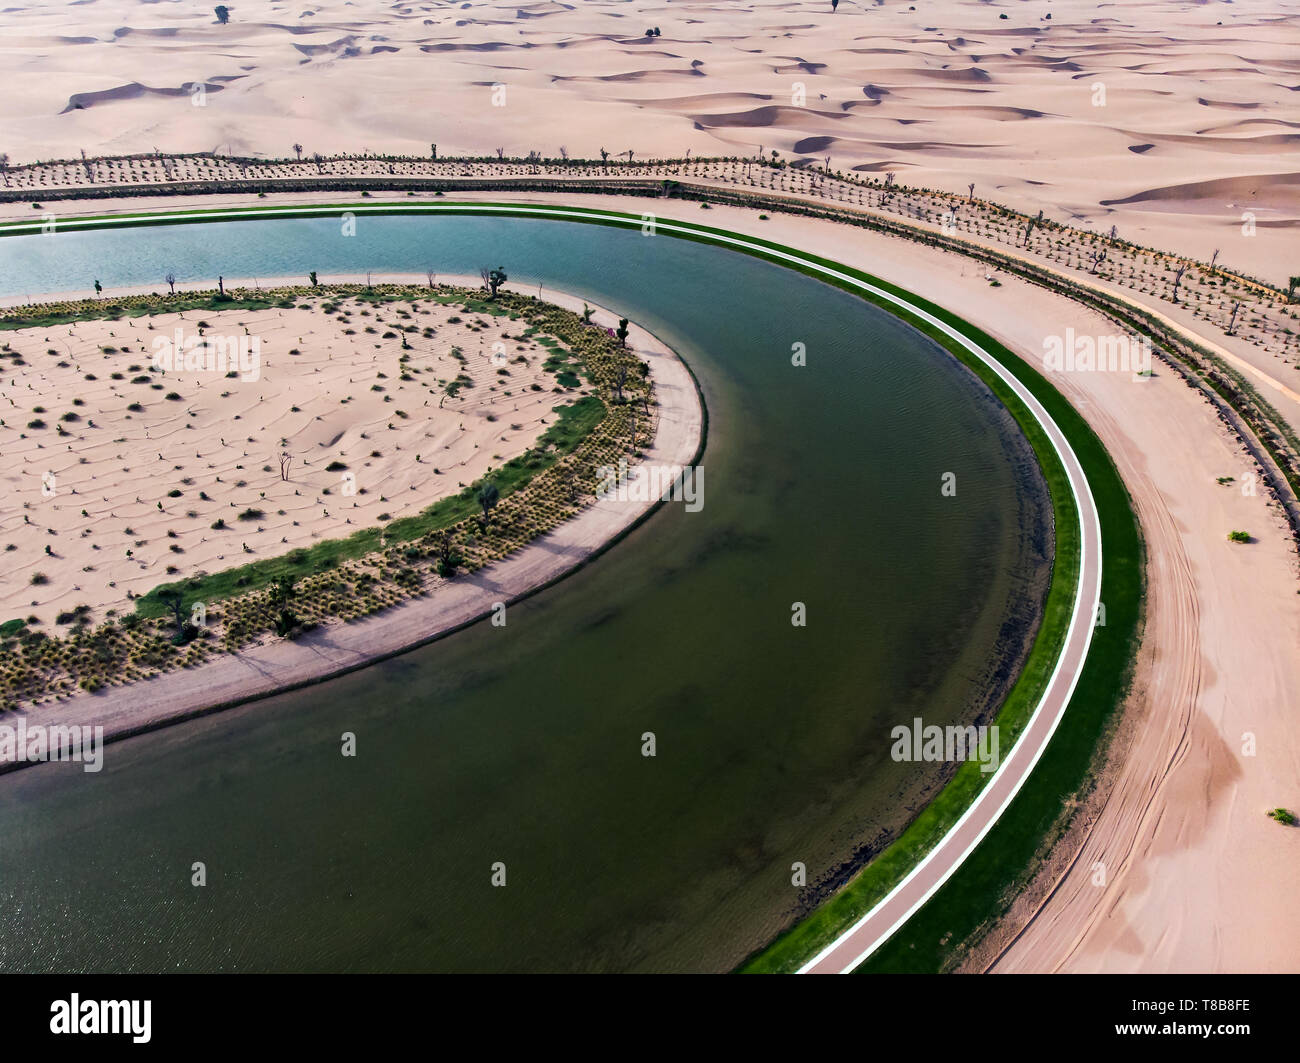 Heart shape Love lake in the Dubai desert aerial view Stock Photo